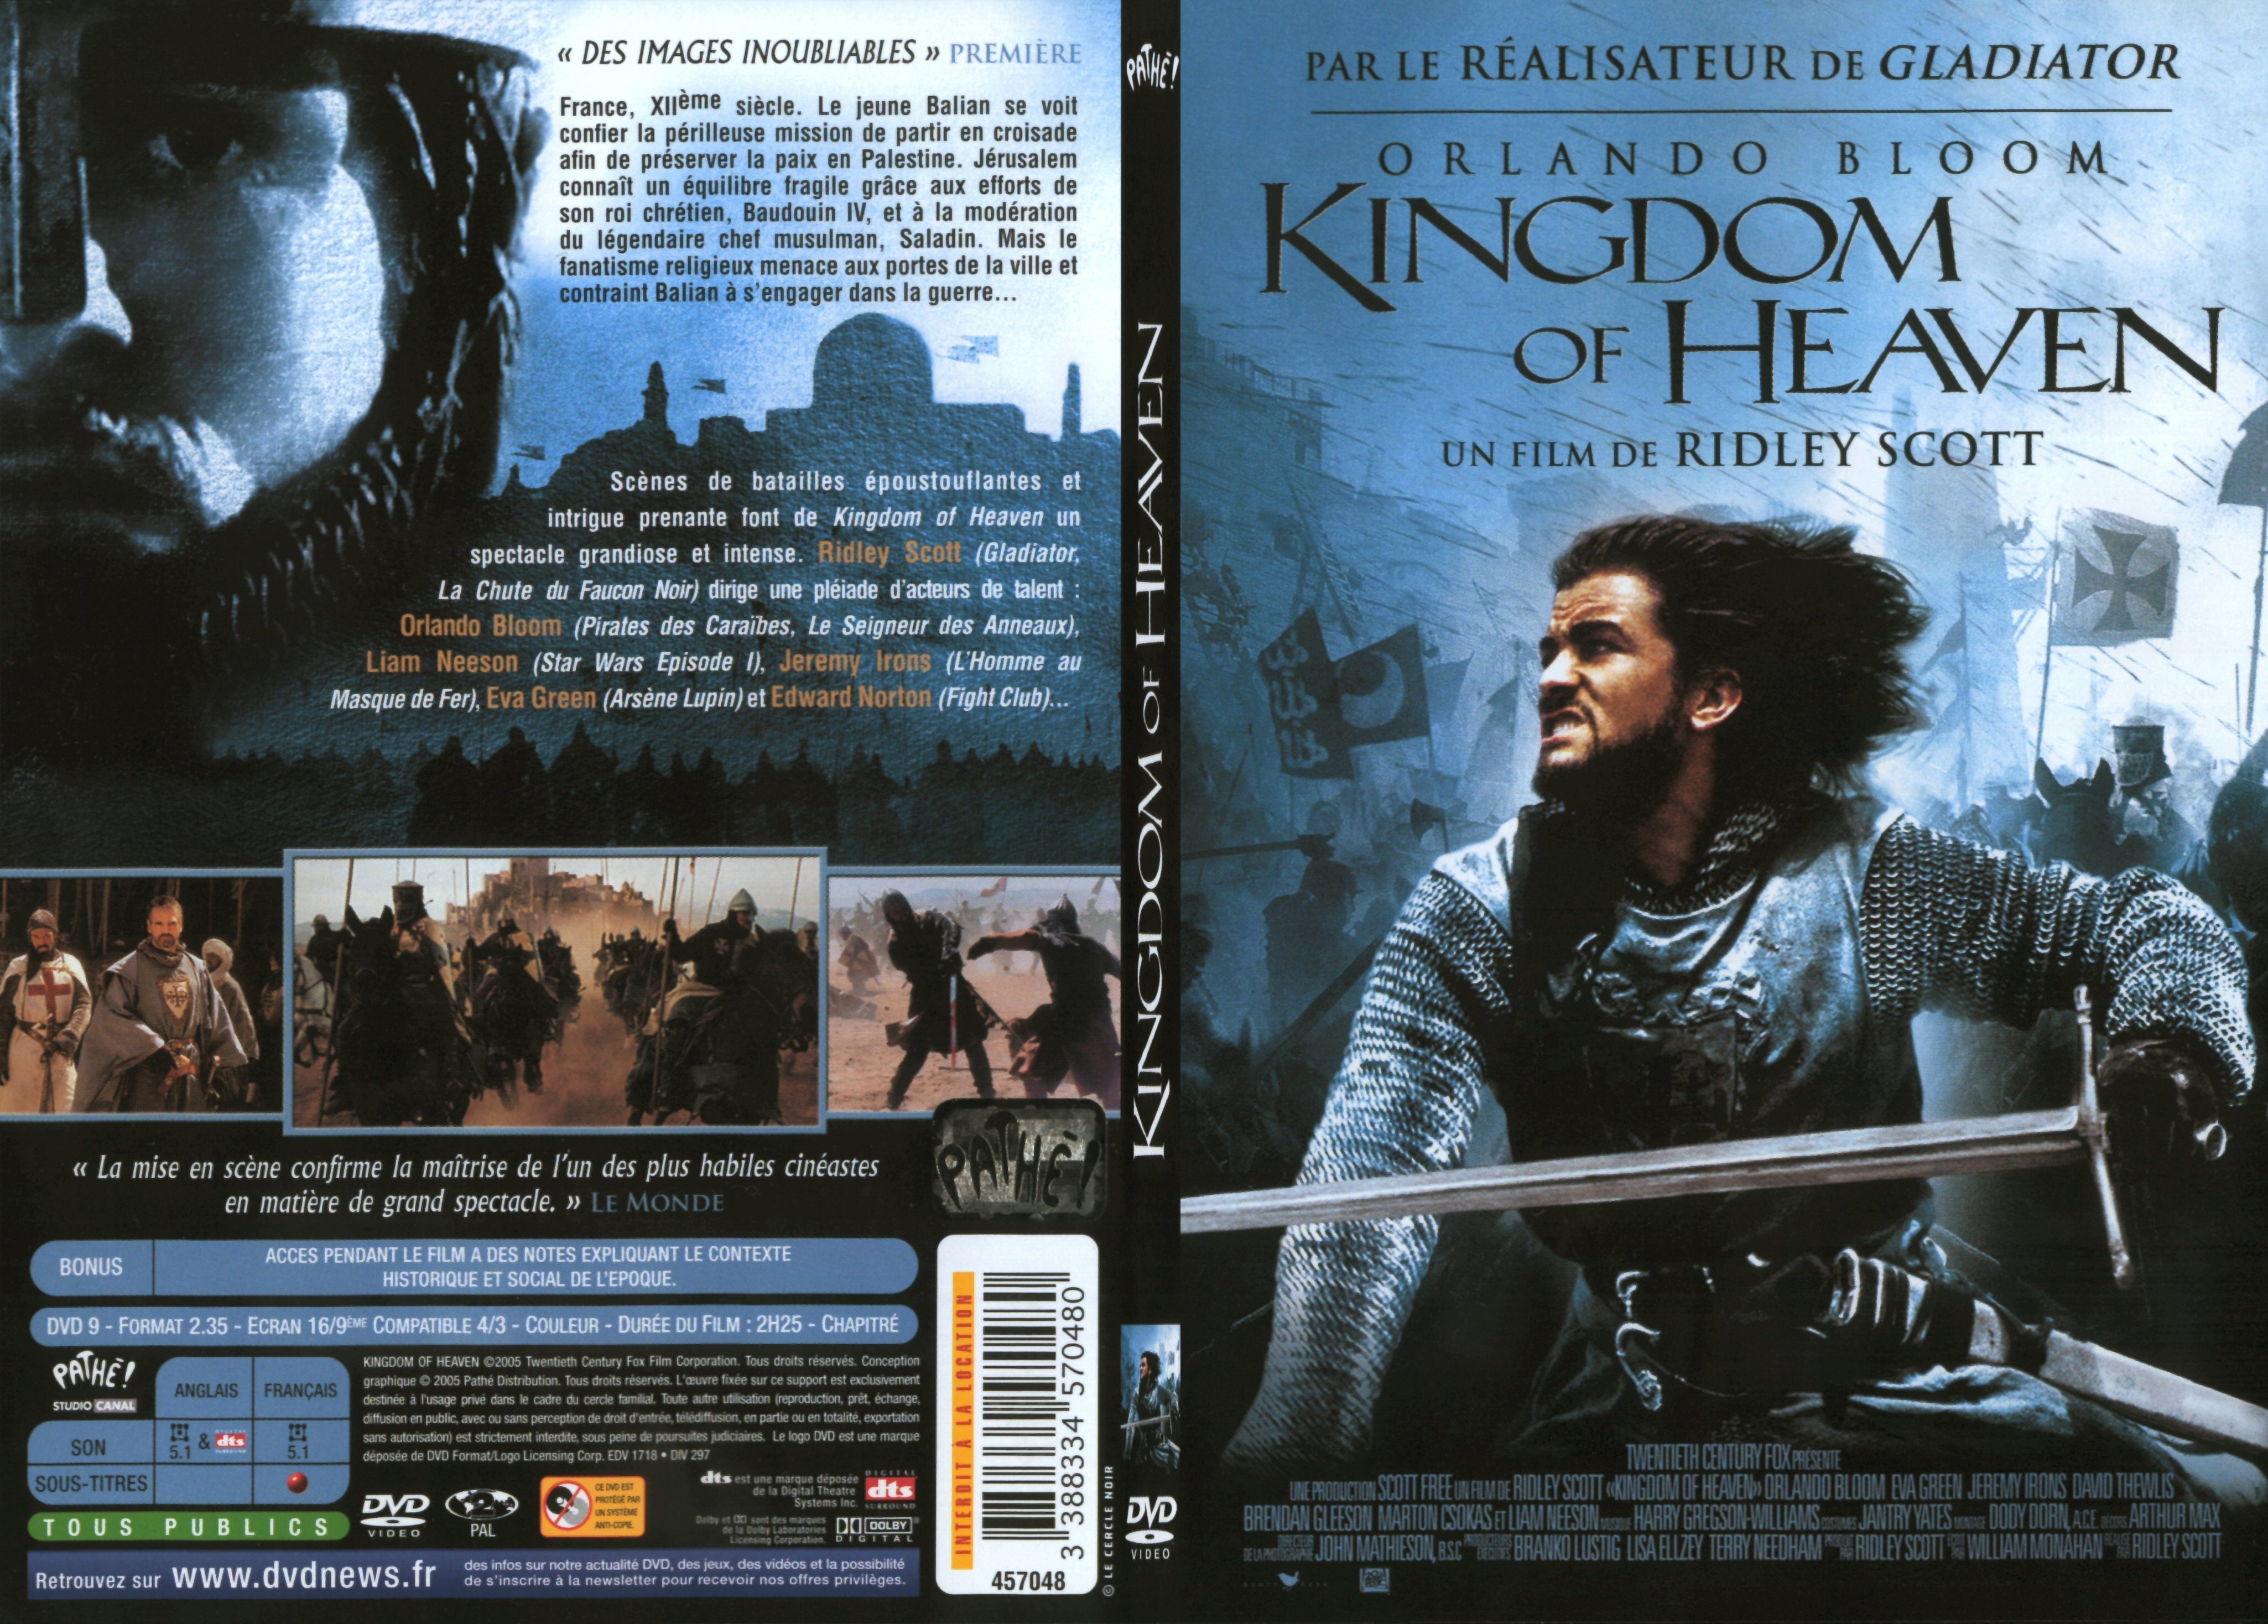 Jaquette DVD Kingdom of Heaven - SLIM v2